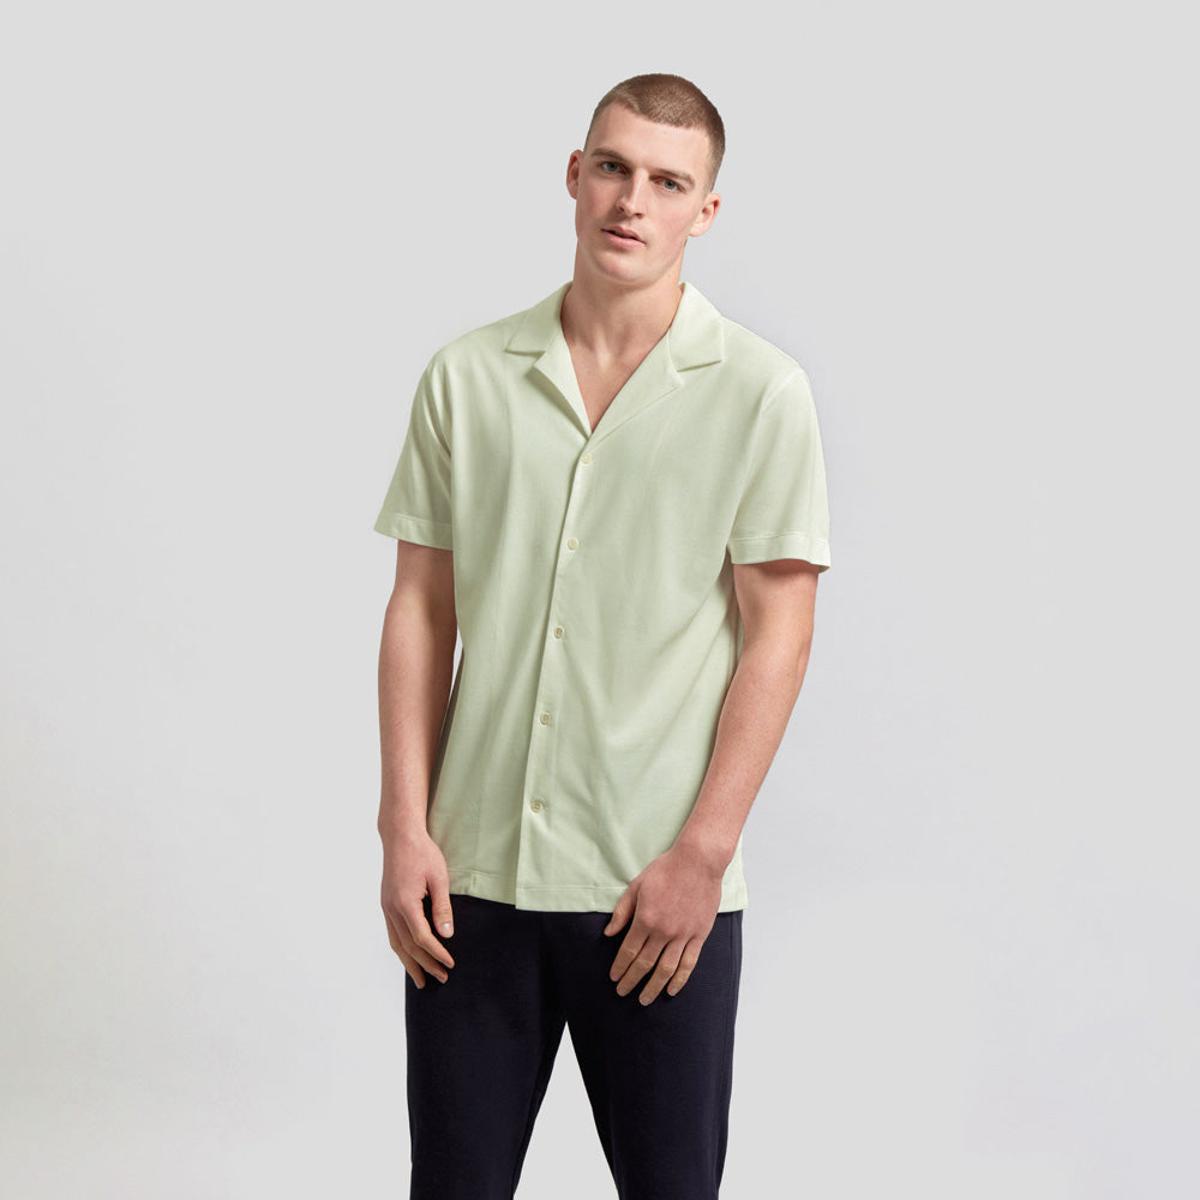 Elo Fashion Interlaken Cut Label Casual shirt for men